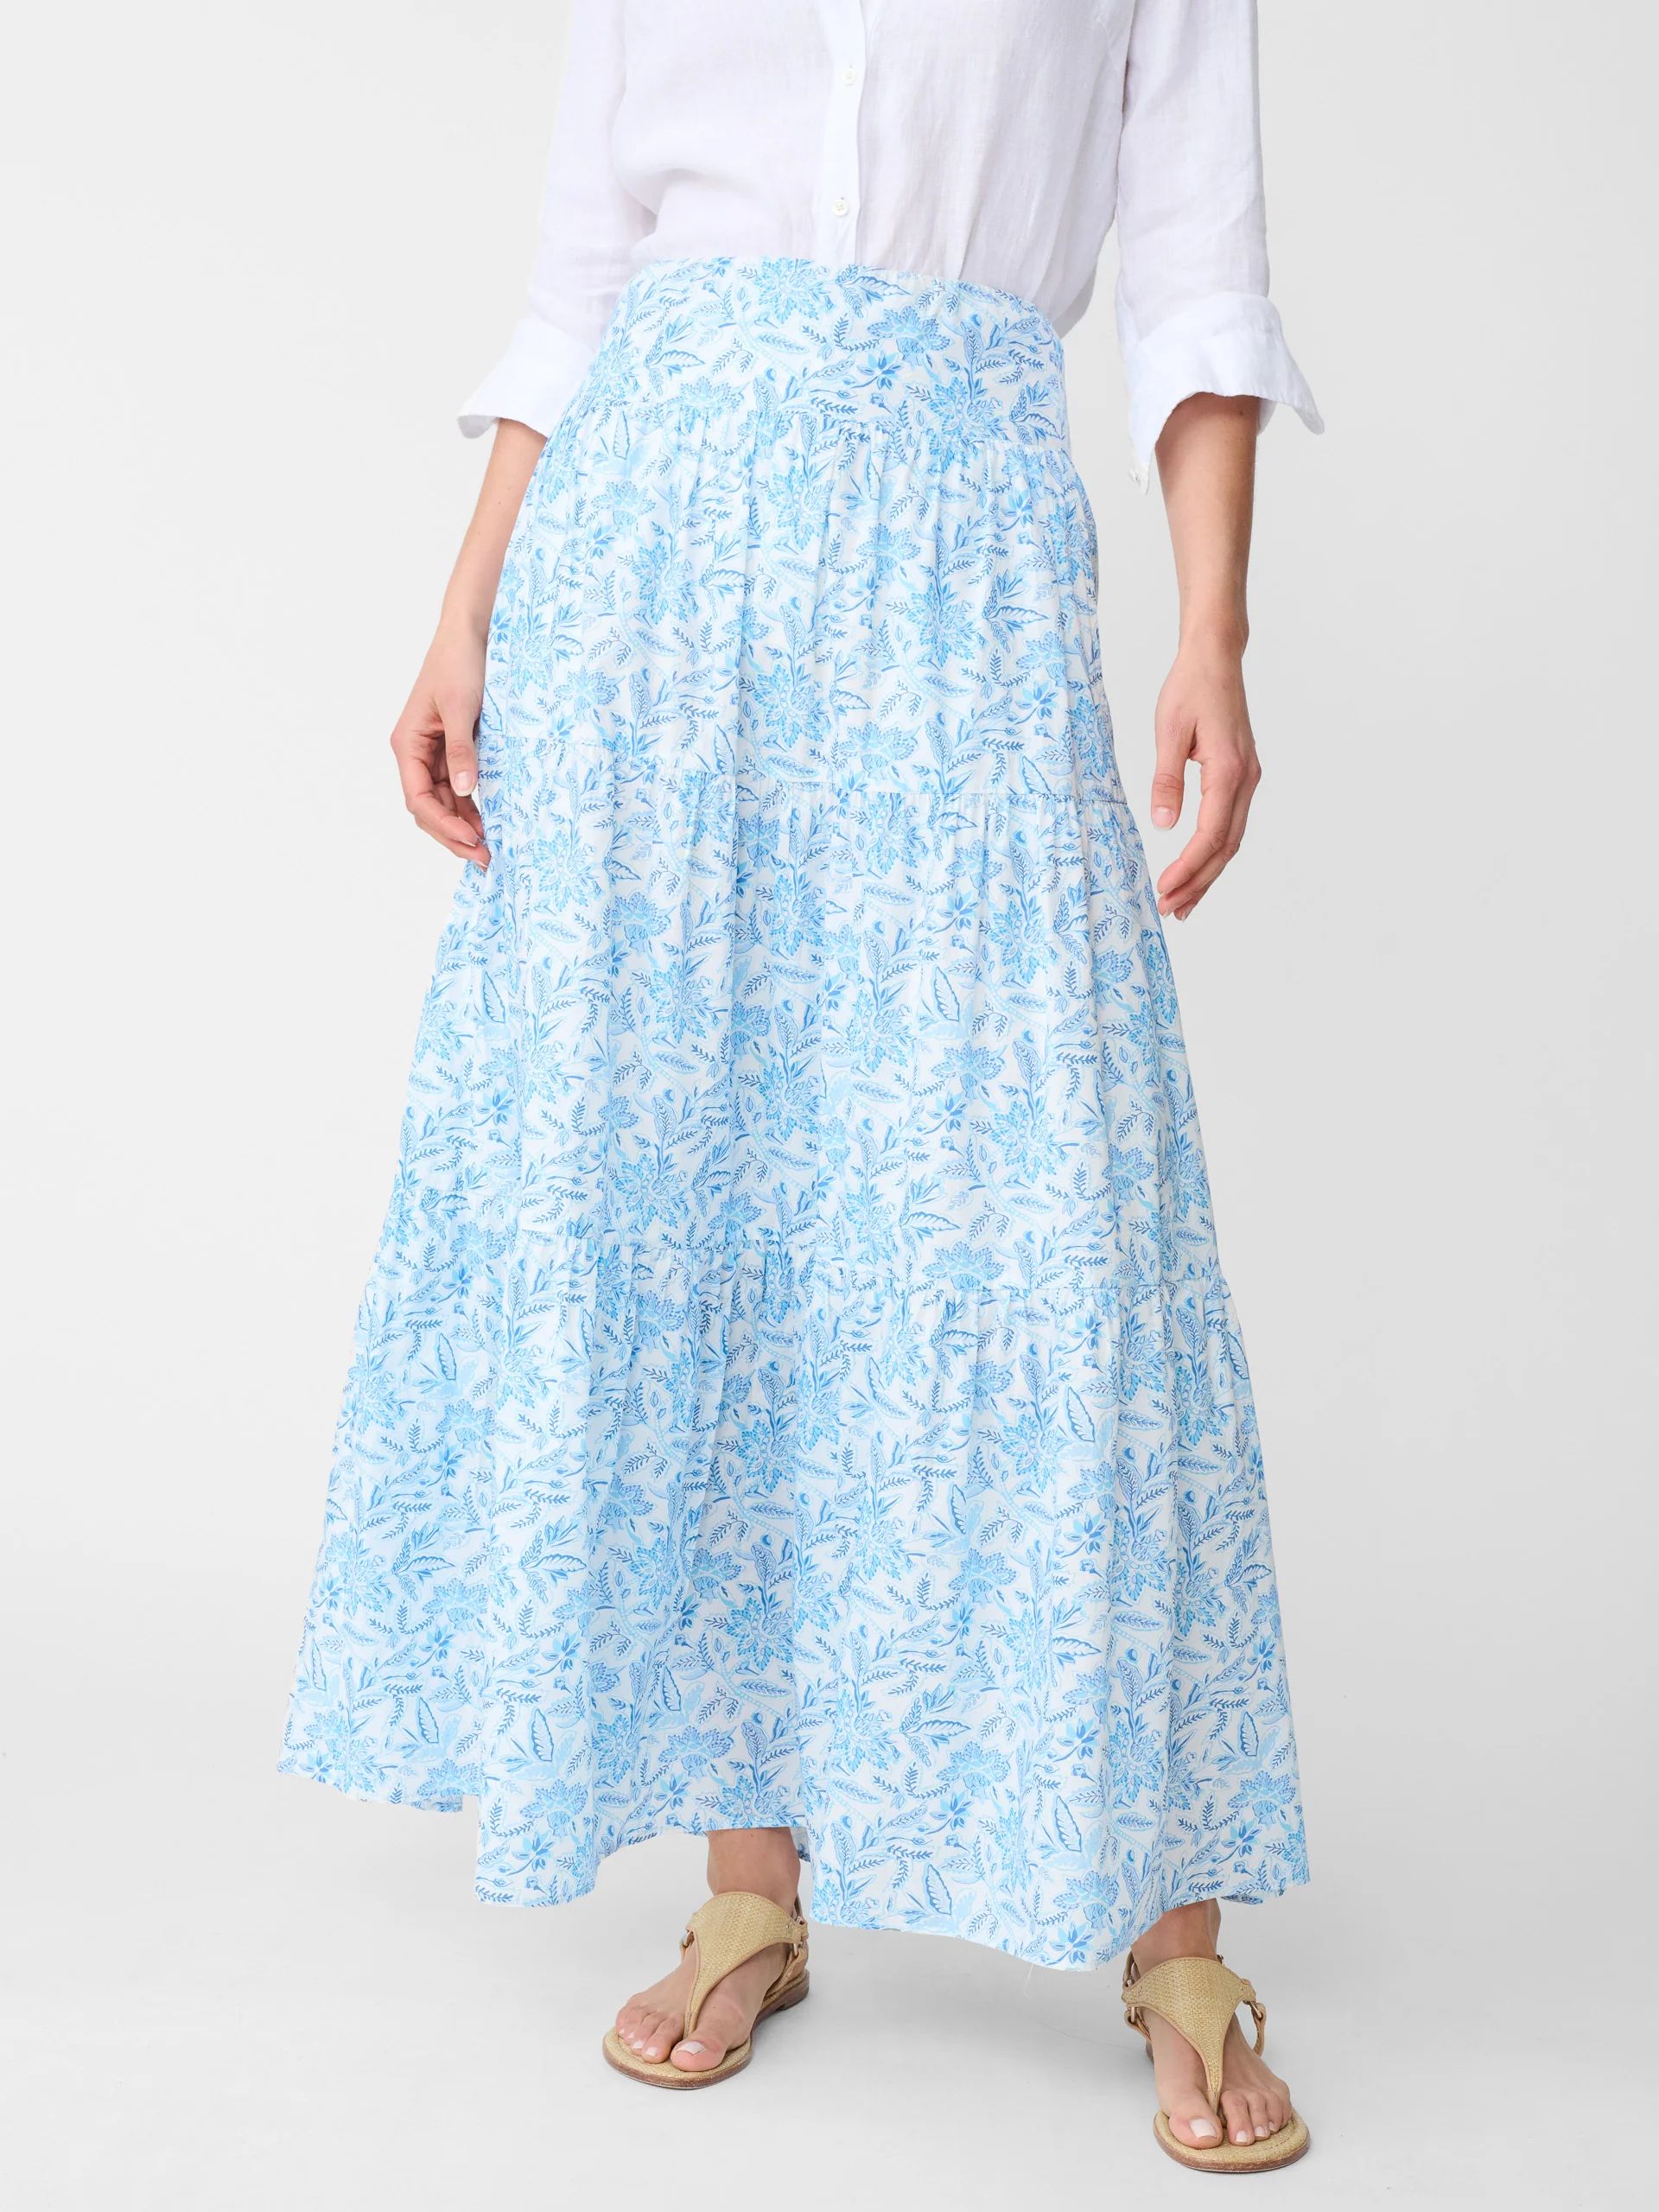 White/Blue Mini Bloomsbury Ophelia Maxi Skirt | Women's Skirts & Skorts | J.McLaughlin | J.McLaughlin